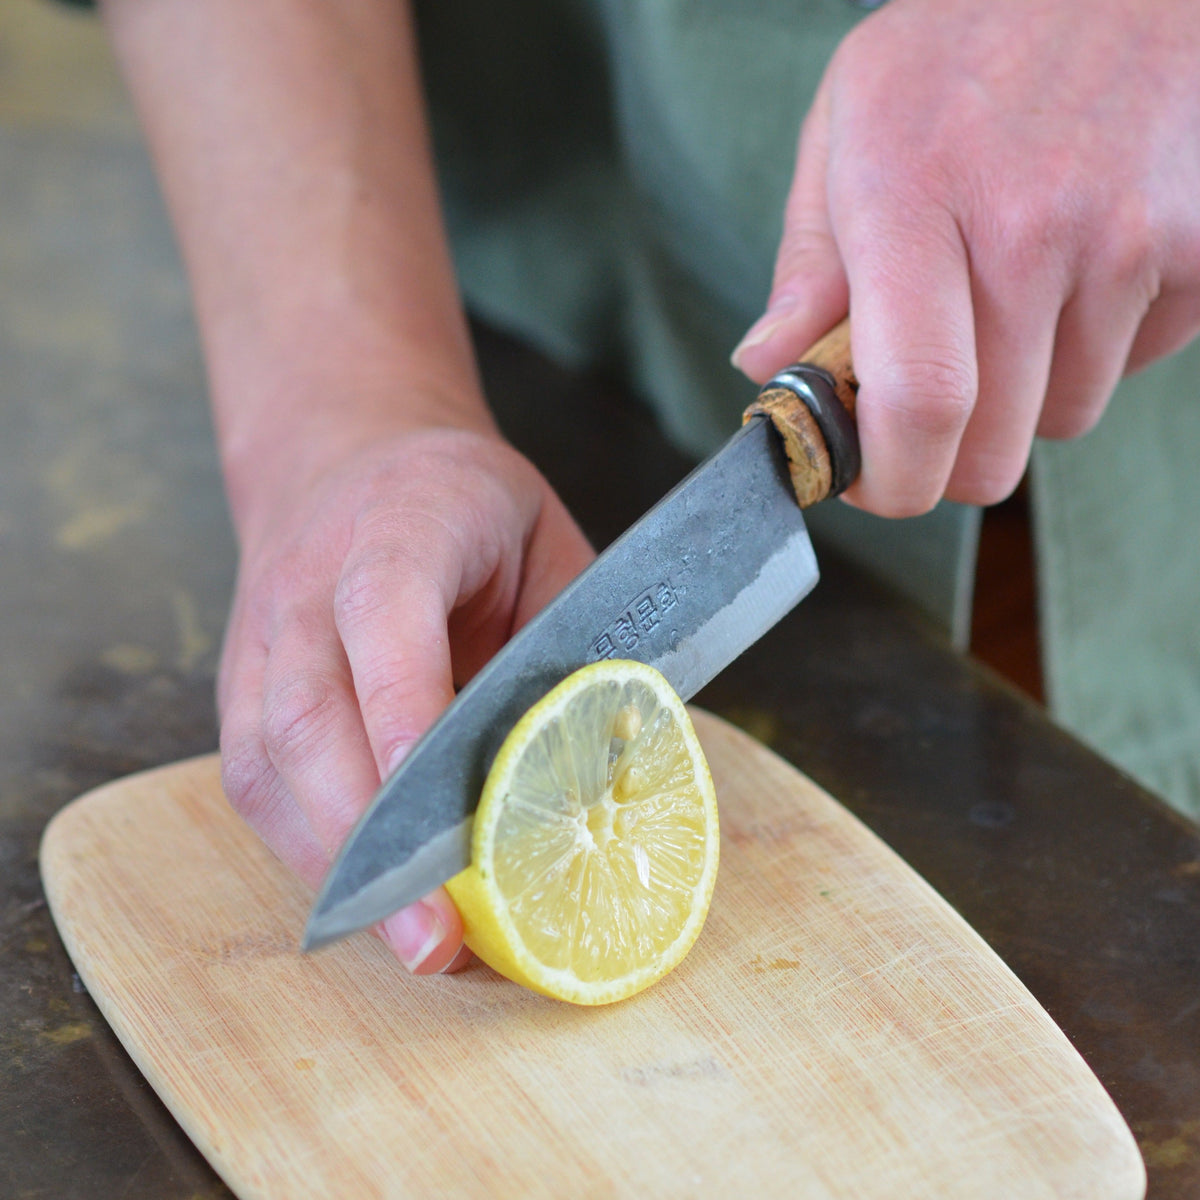 Master Shin's Anvil, #61 Sashimi Knife, lifestyle photo of man slicing lemon